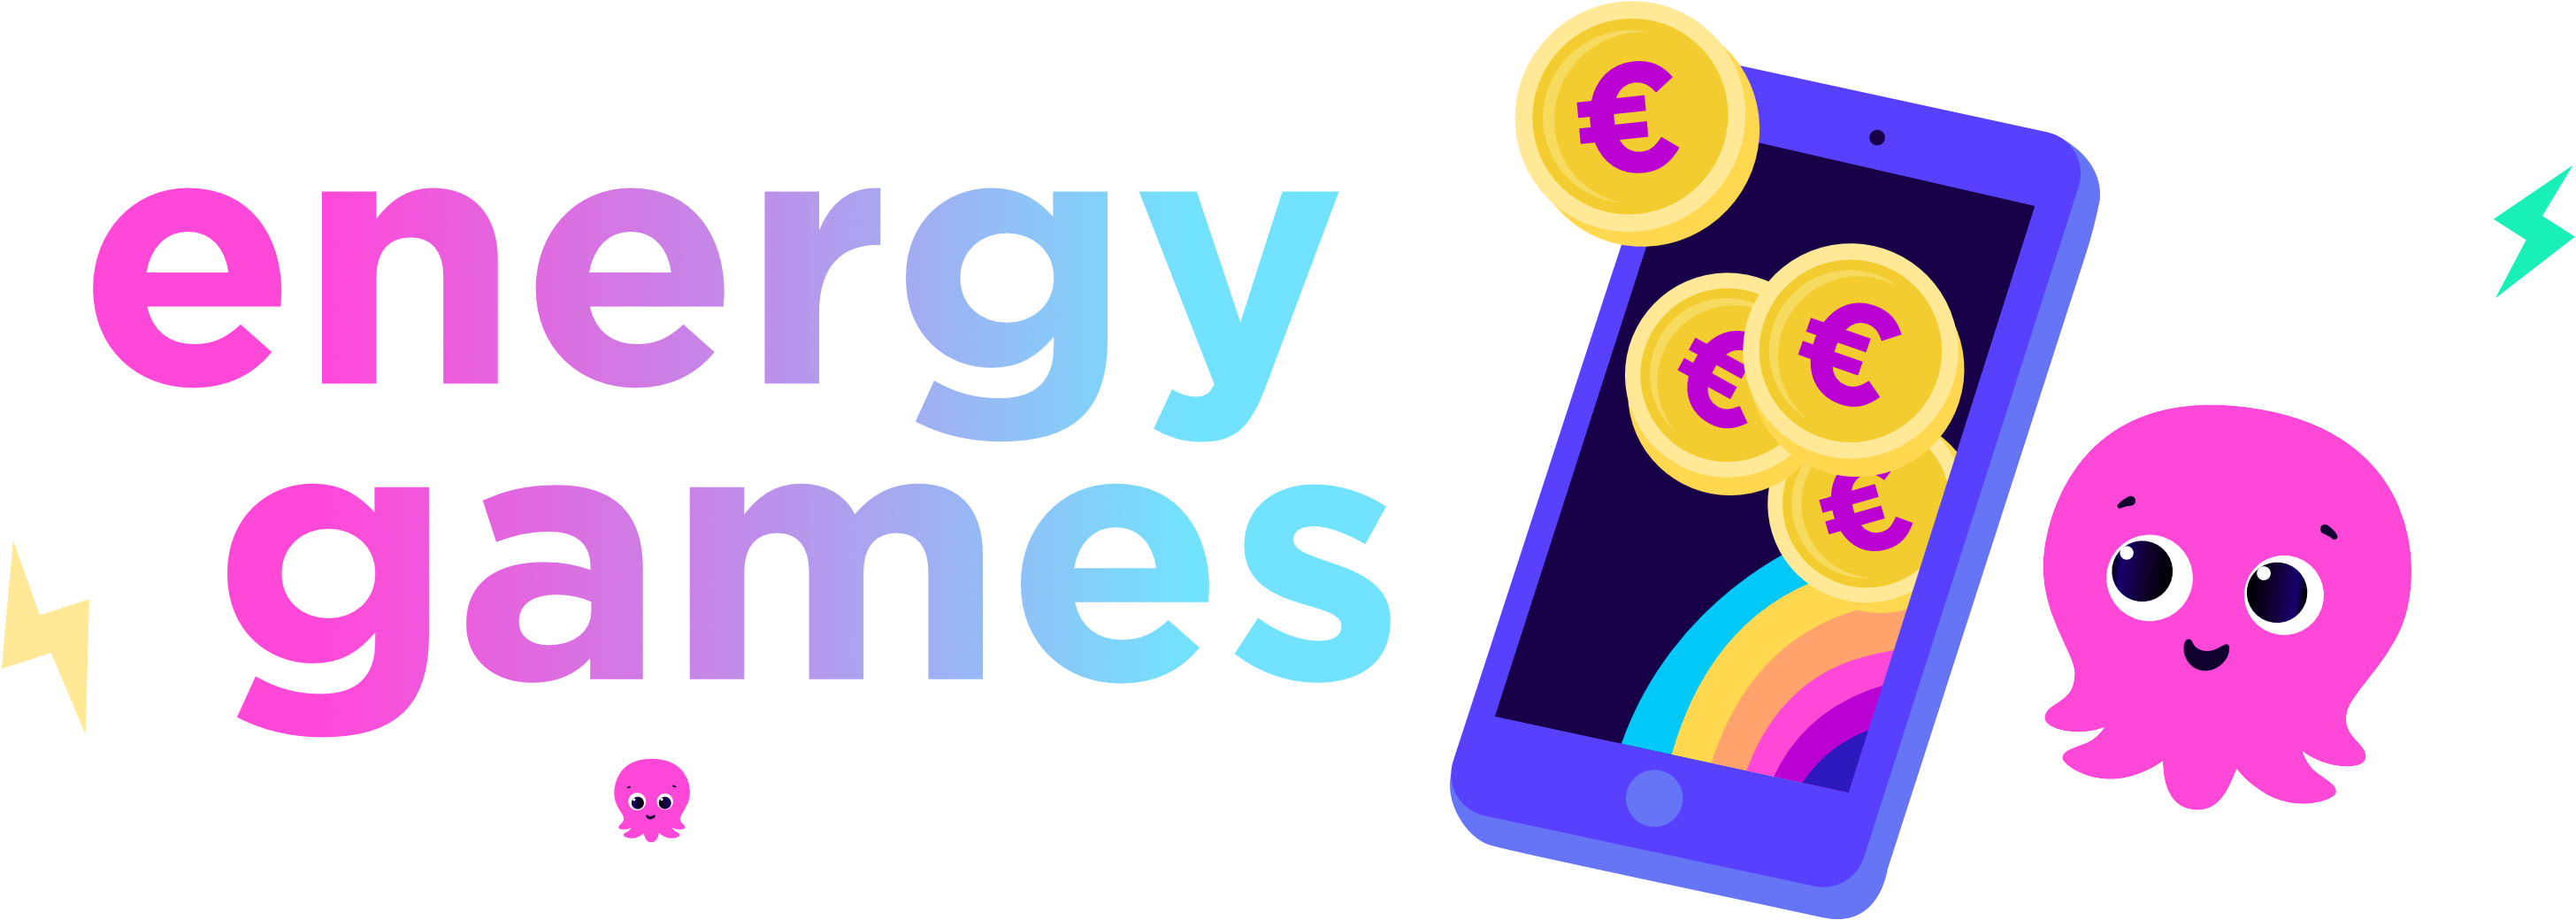 Energy games application mobile 1000€ à gagner